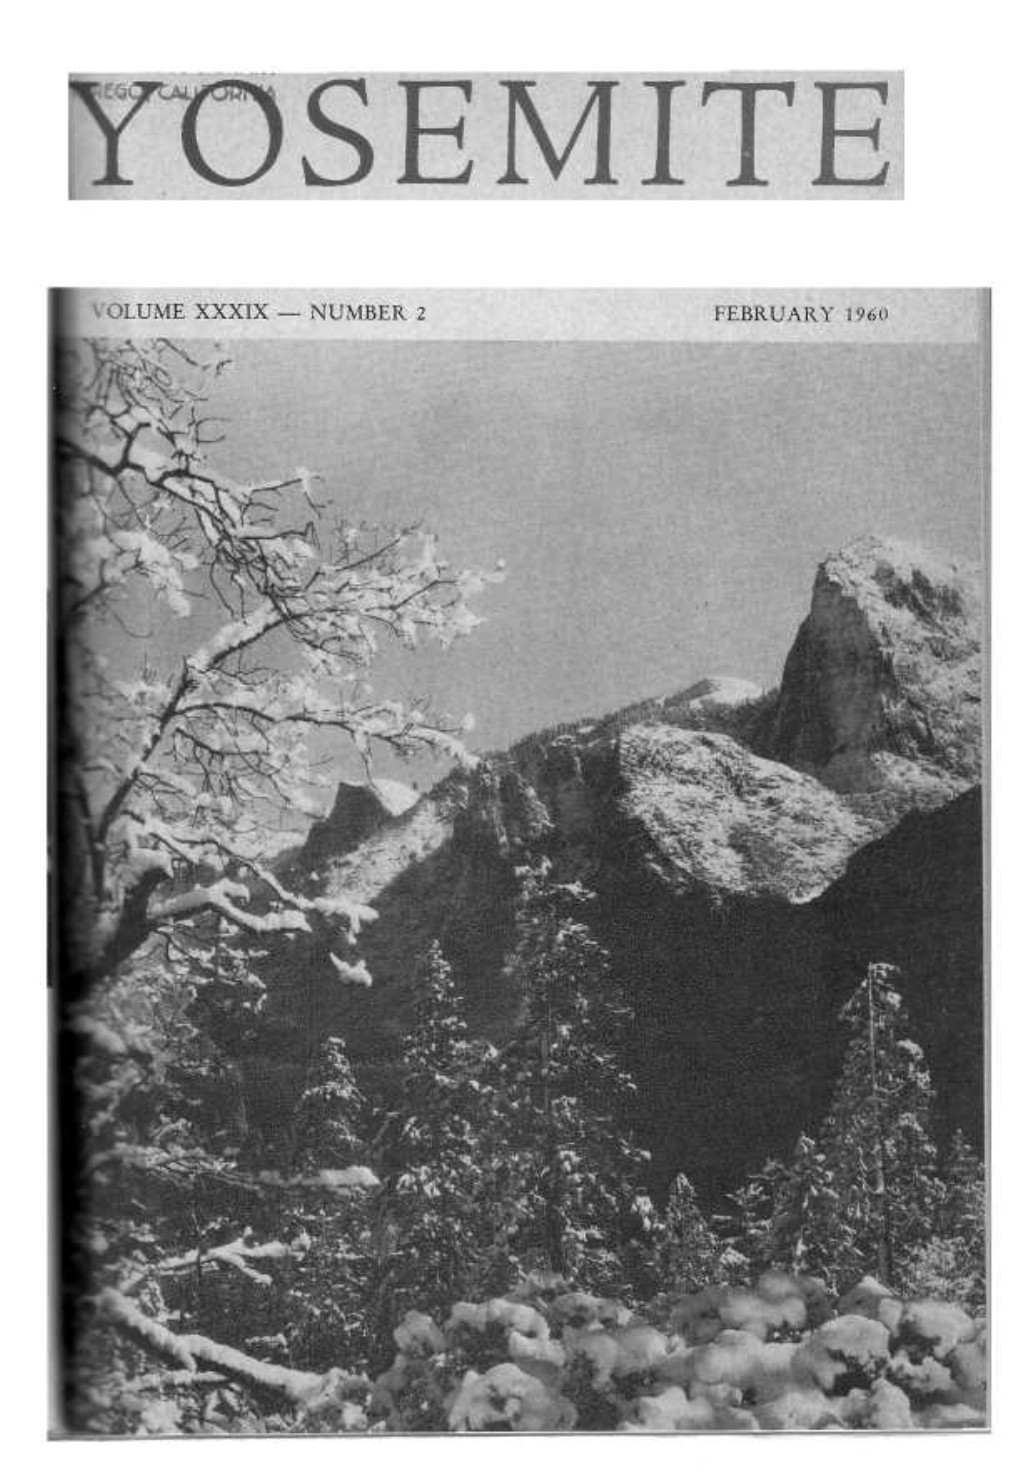 [PDF] “Yosemite Valley in Winter,”